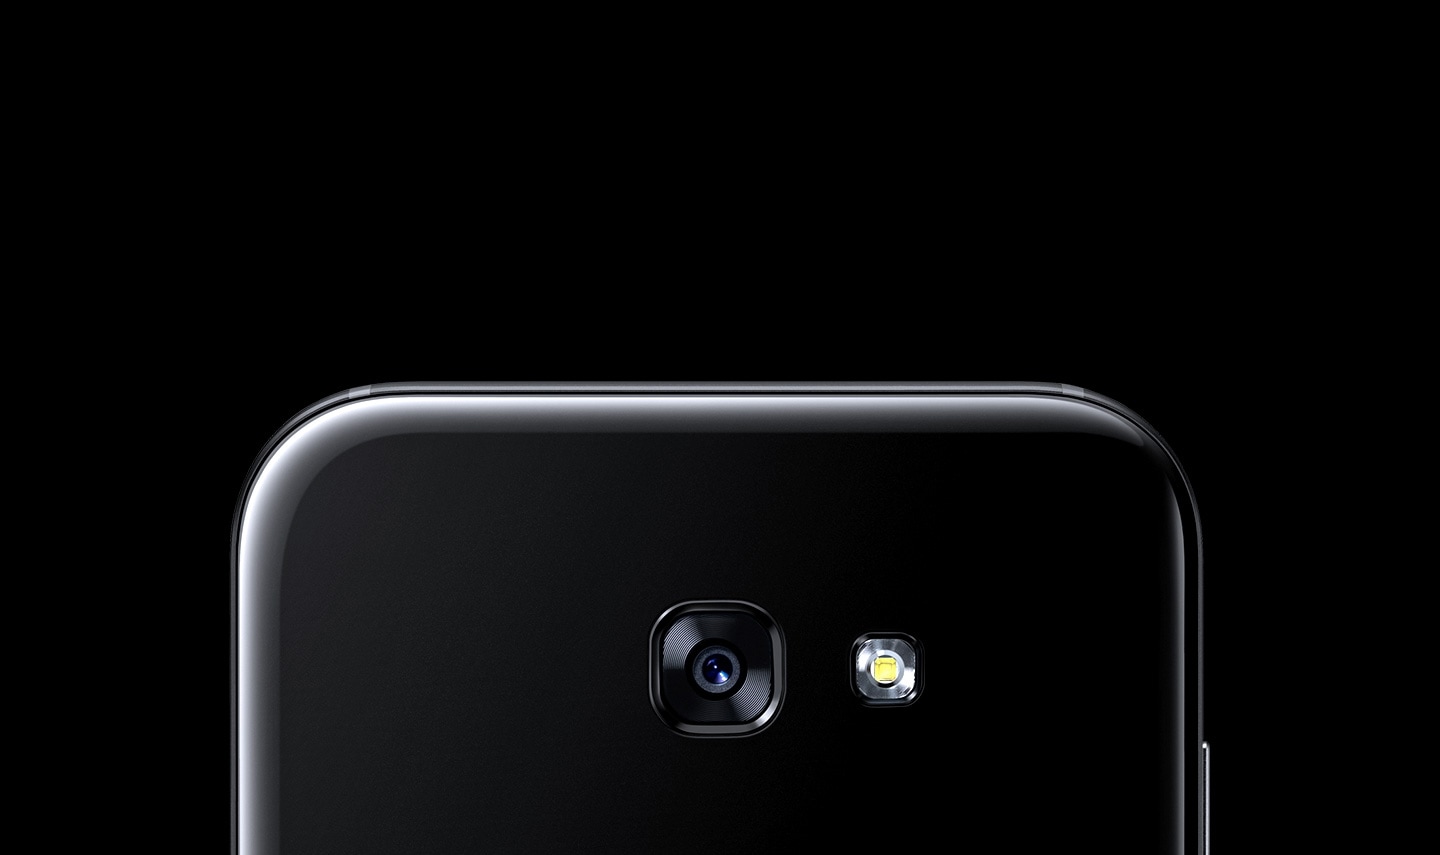 Close up of the Galaxy A7 (2017) rear camera.